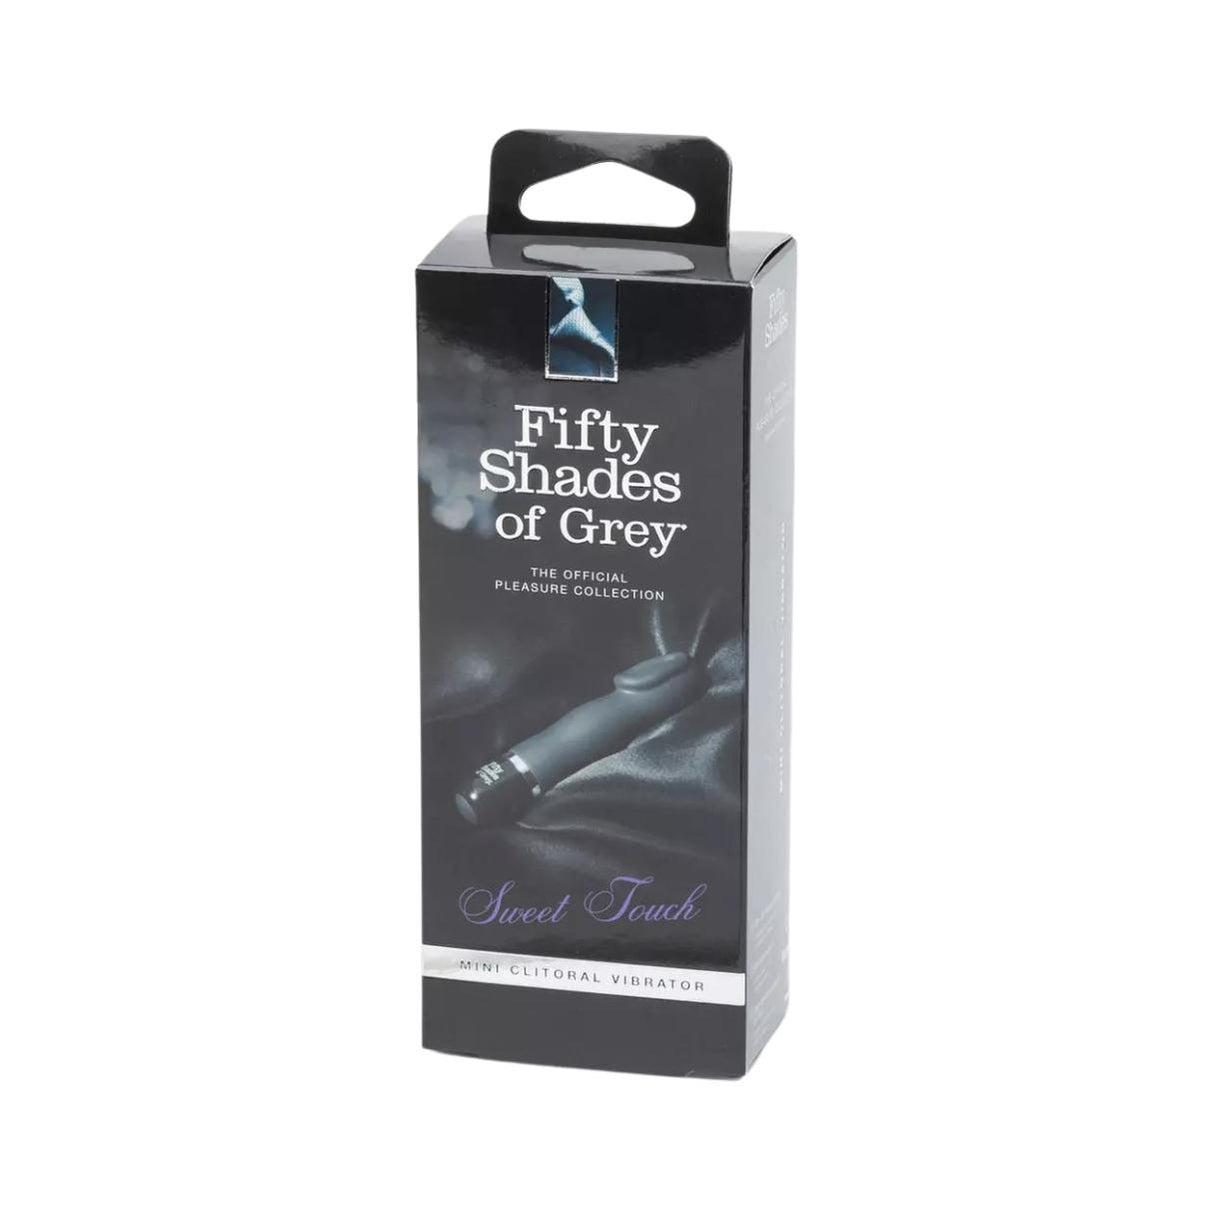 Fifty Shades Of Grey Mini Clit Vibrator